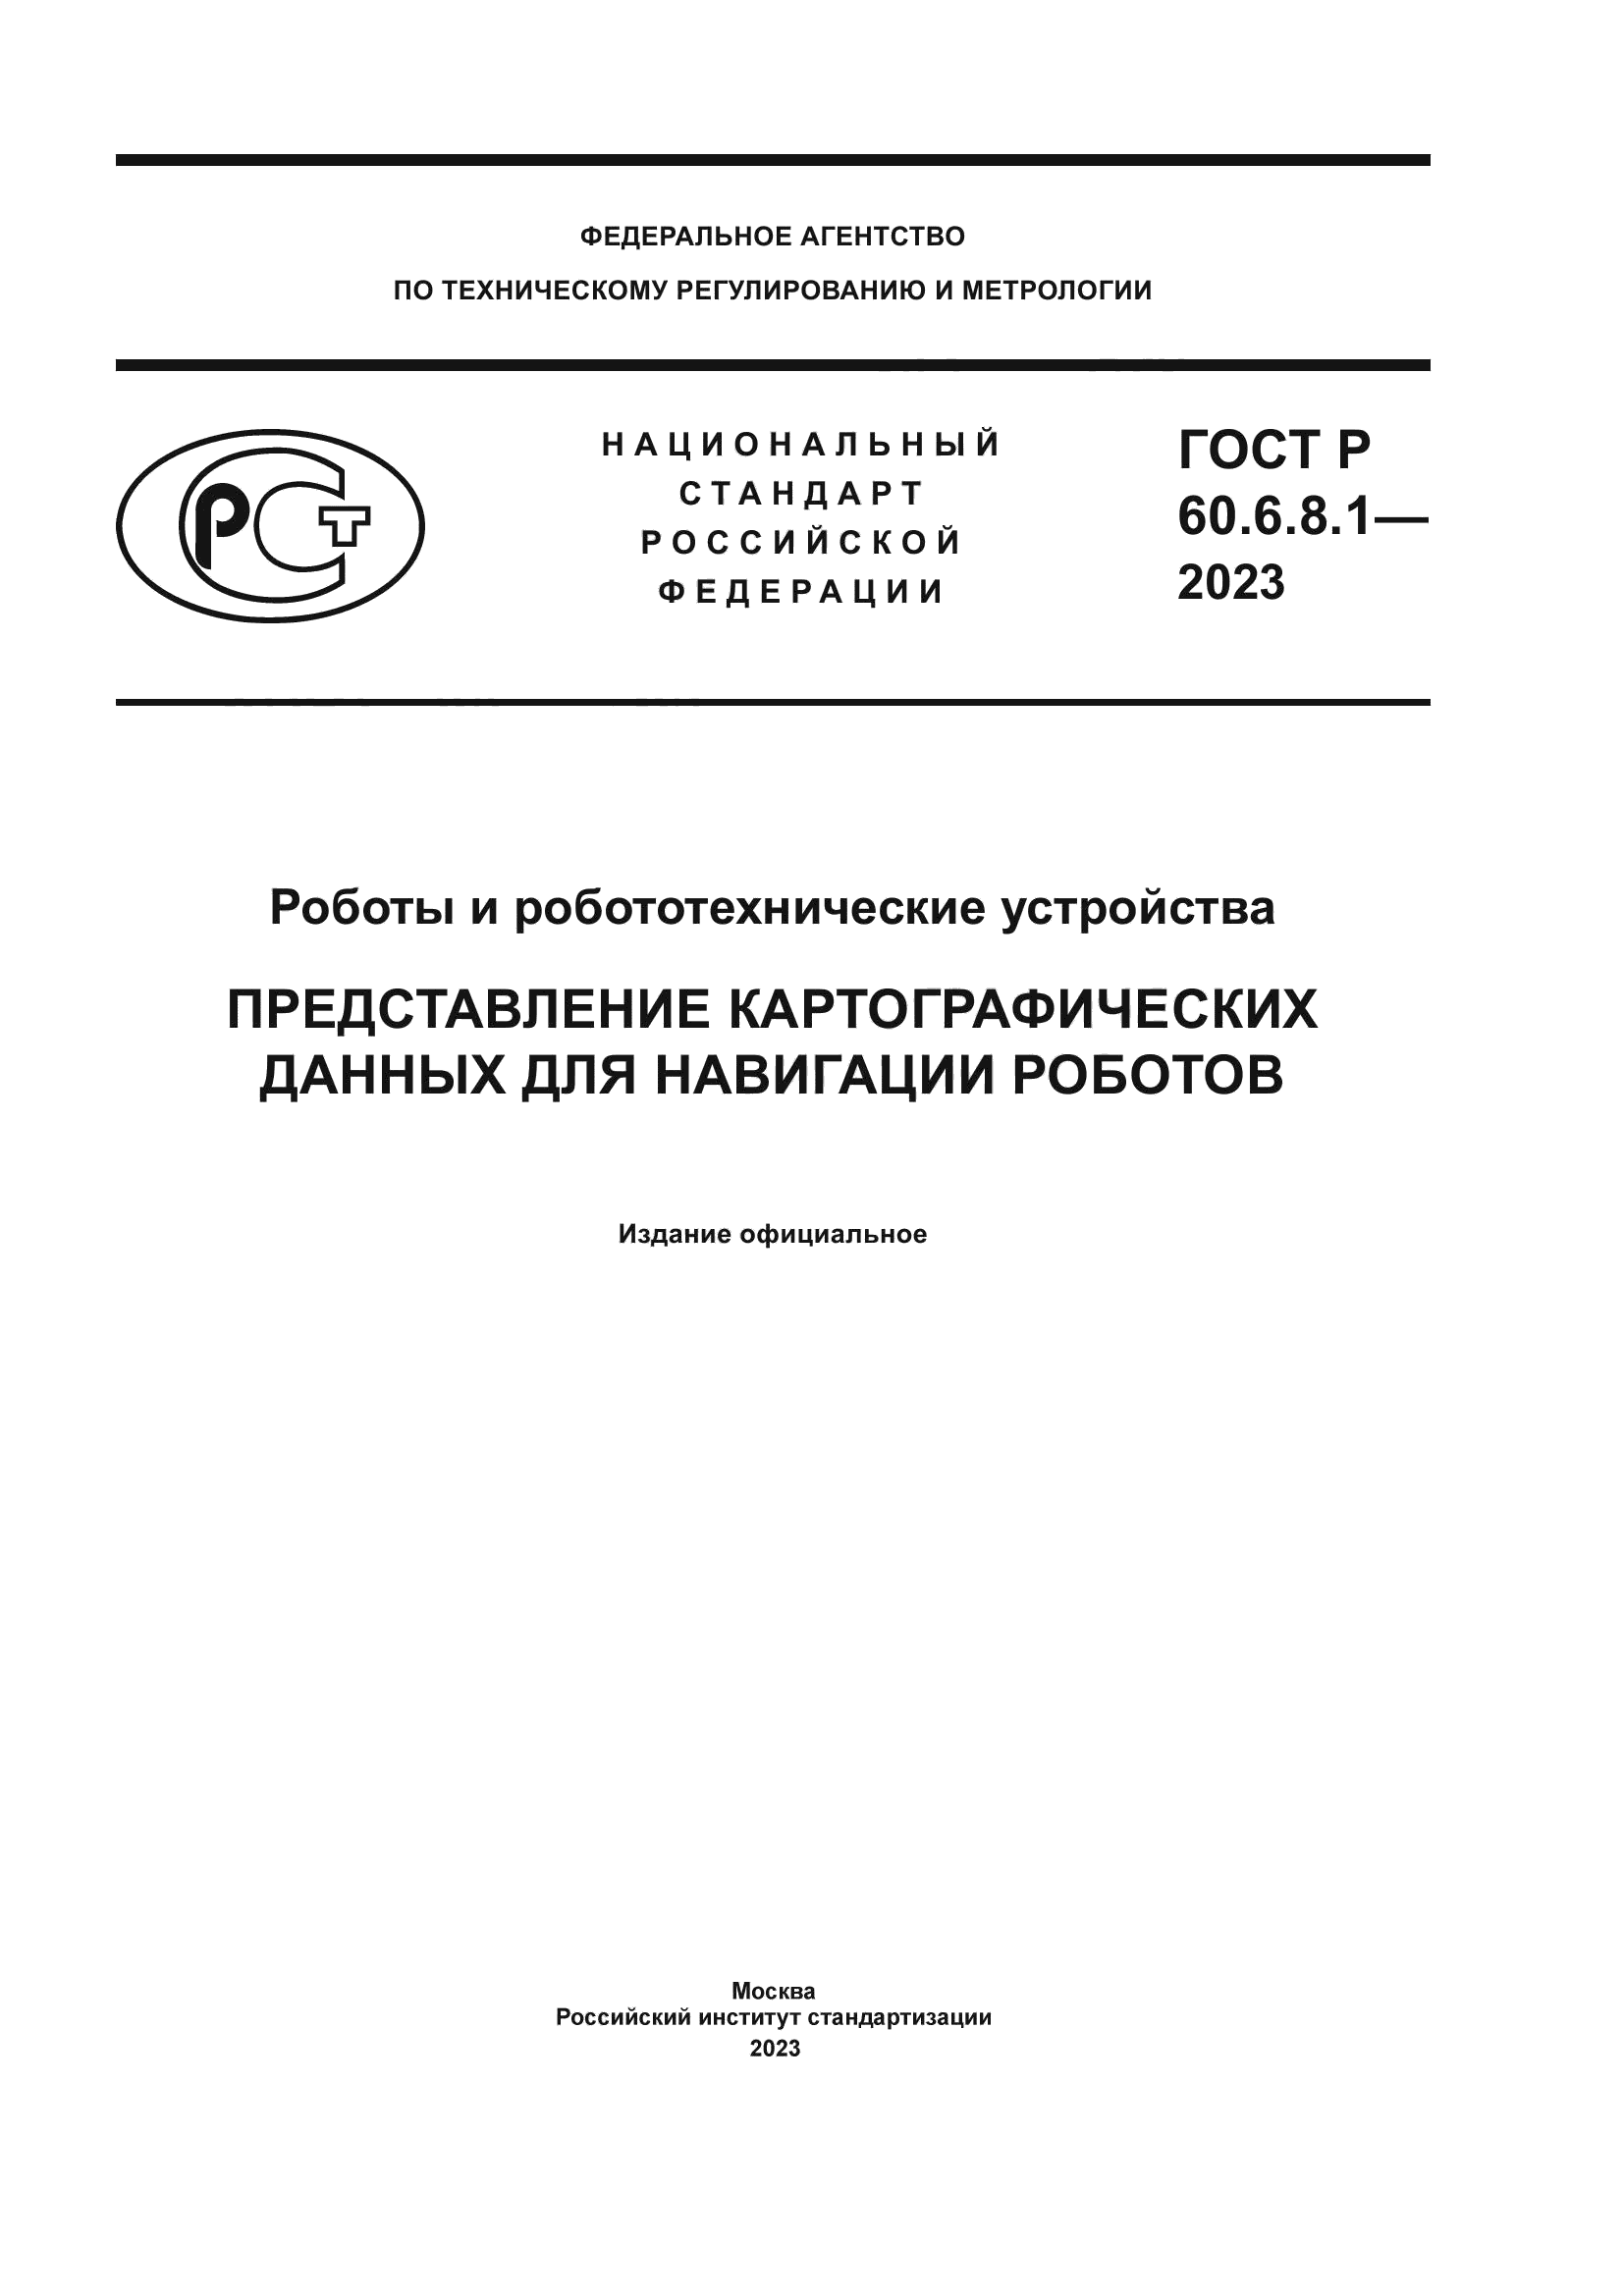 ГОСТ Р 60.6.8.1-2023